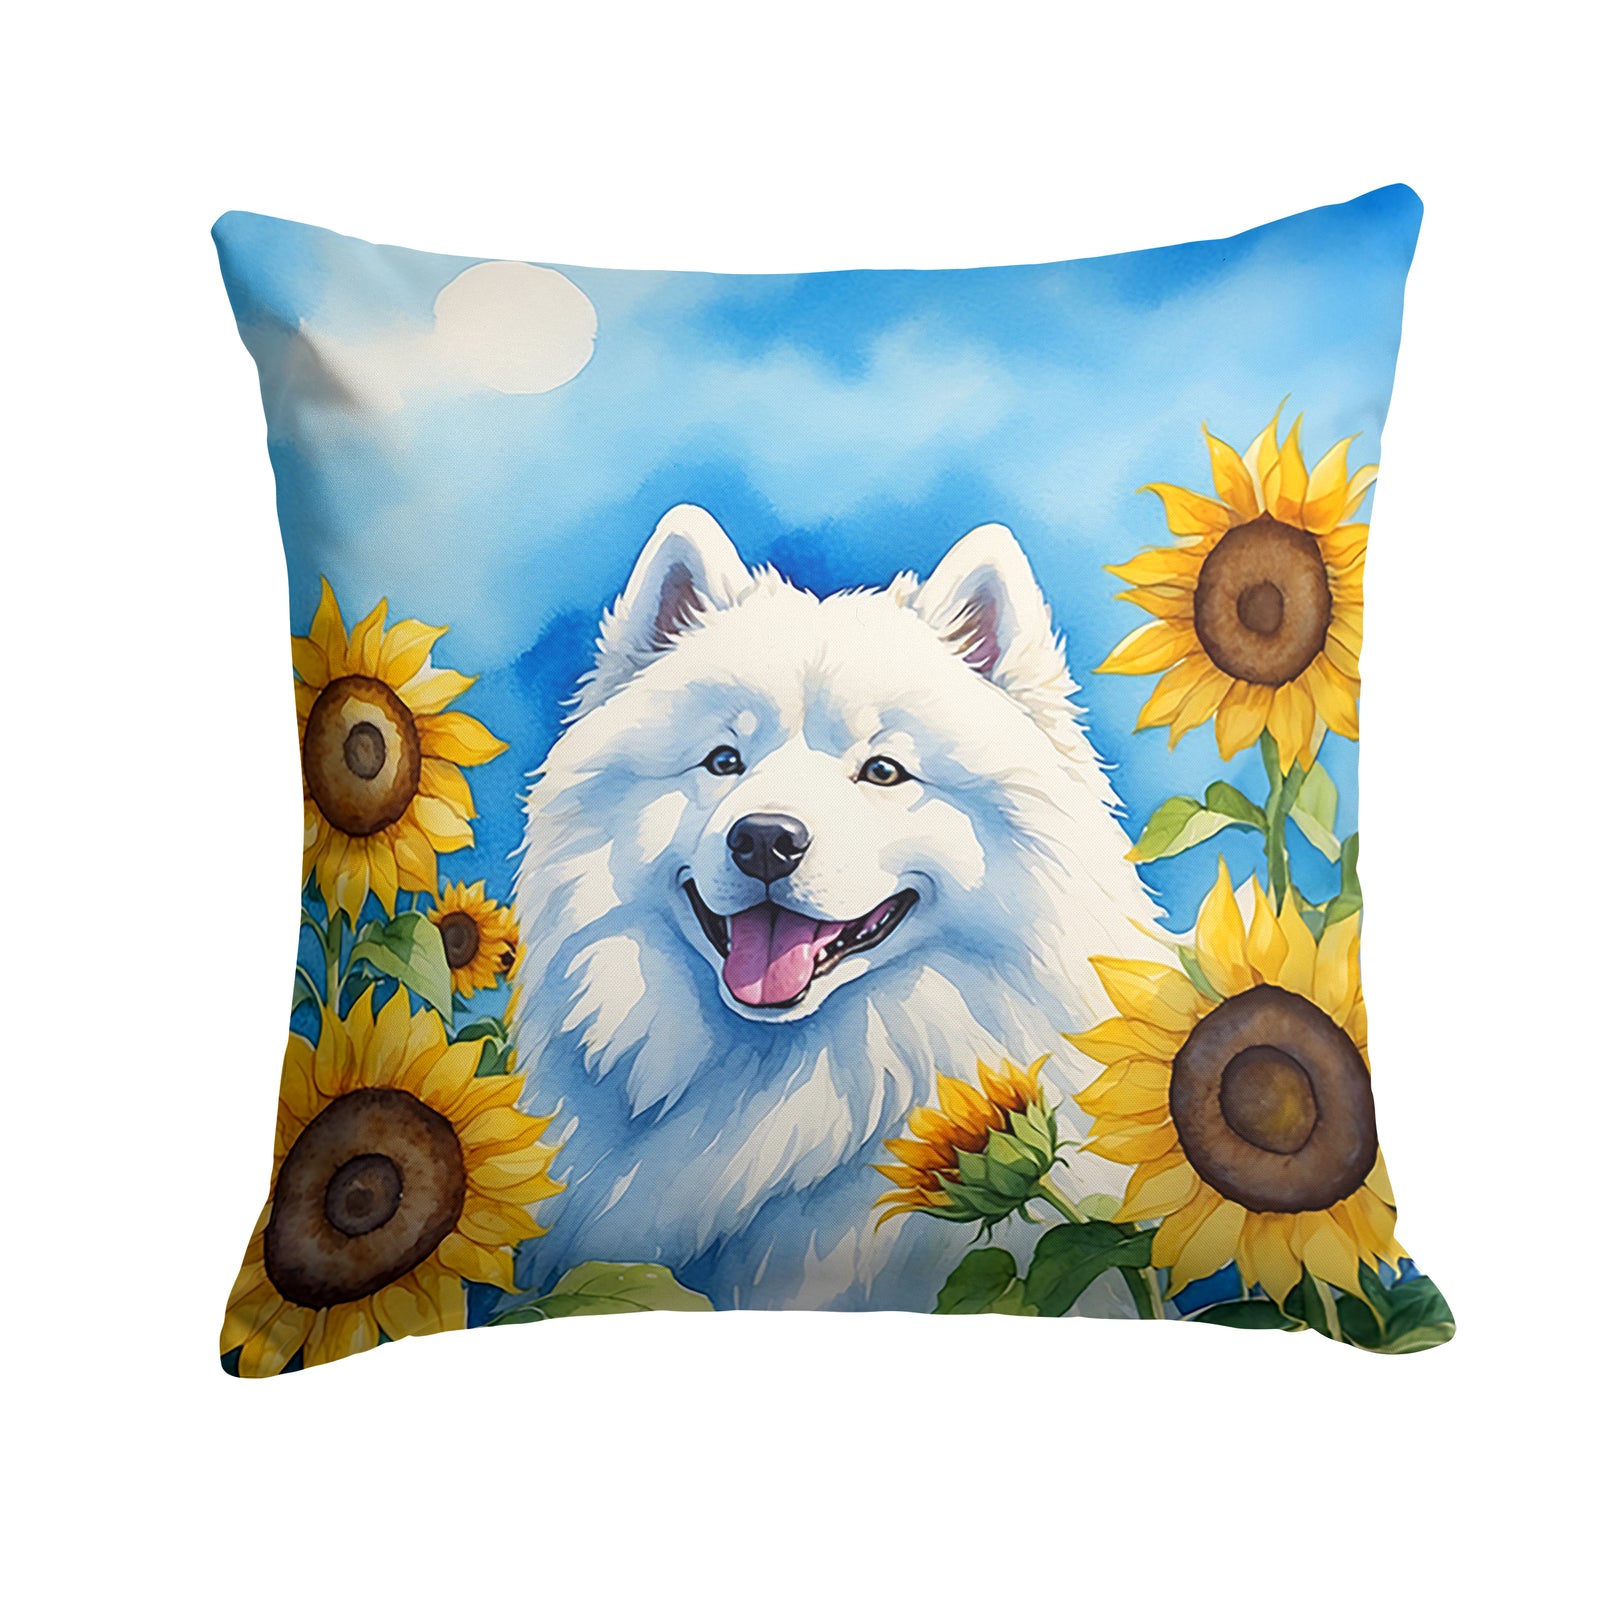 Buy this Samoyed in Sunflowers Throw Pillow